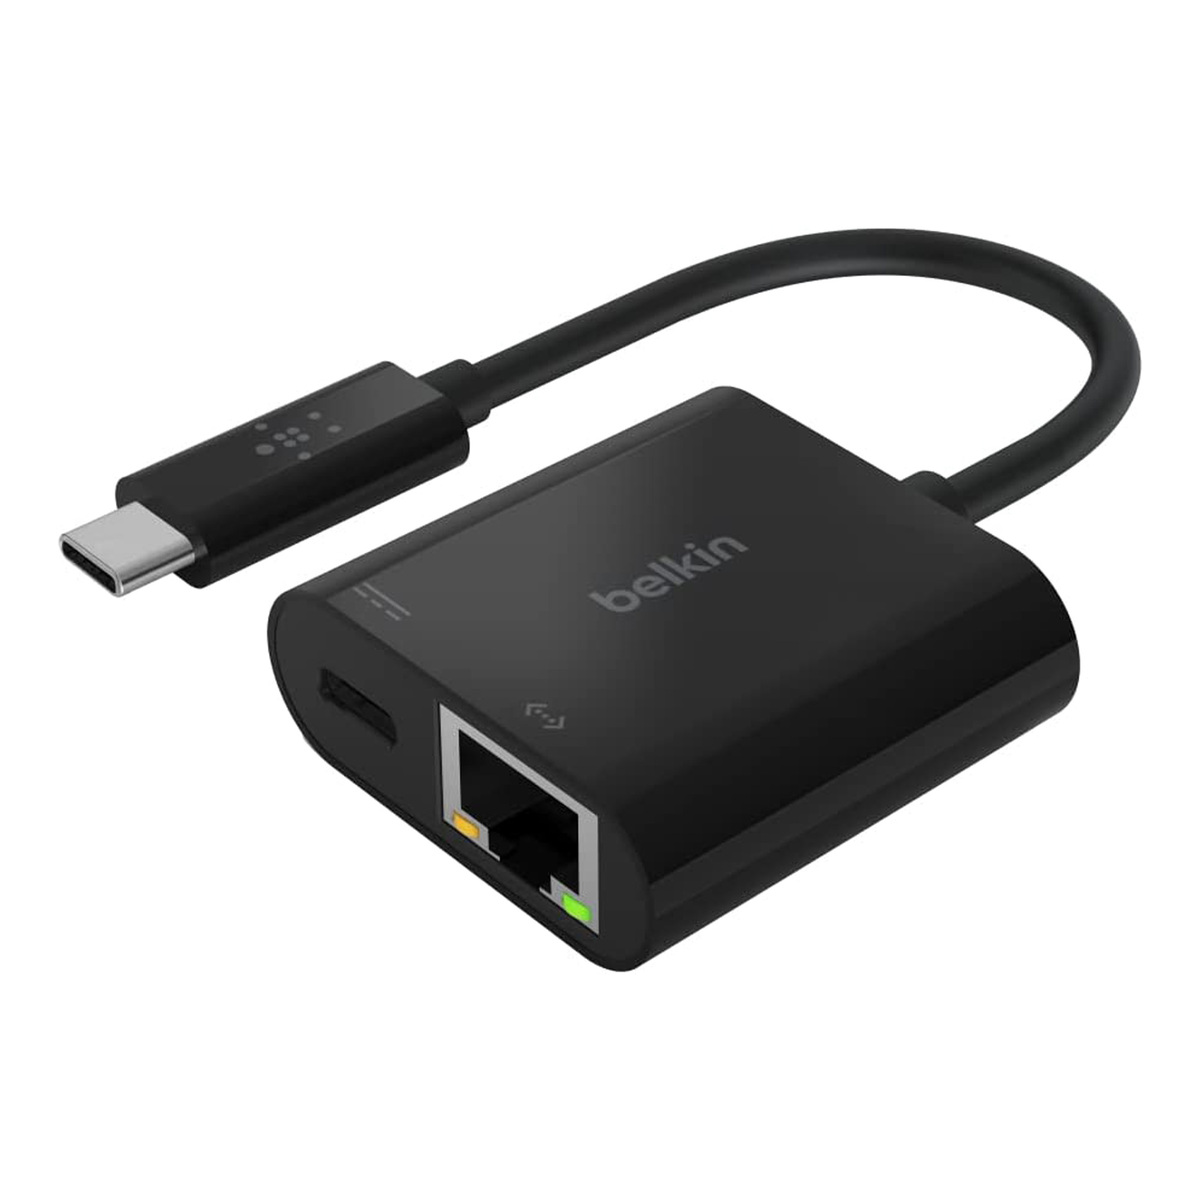 Belkin USB-C to Ethernet + Type-C Charger Adapter, Black, INC001BTBLK